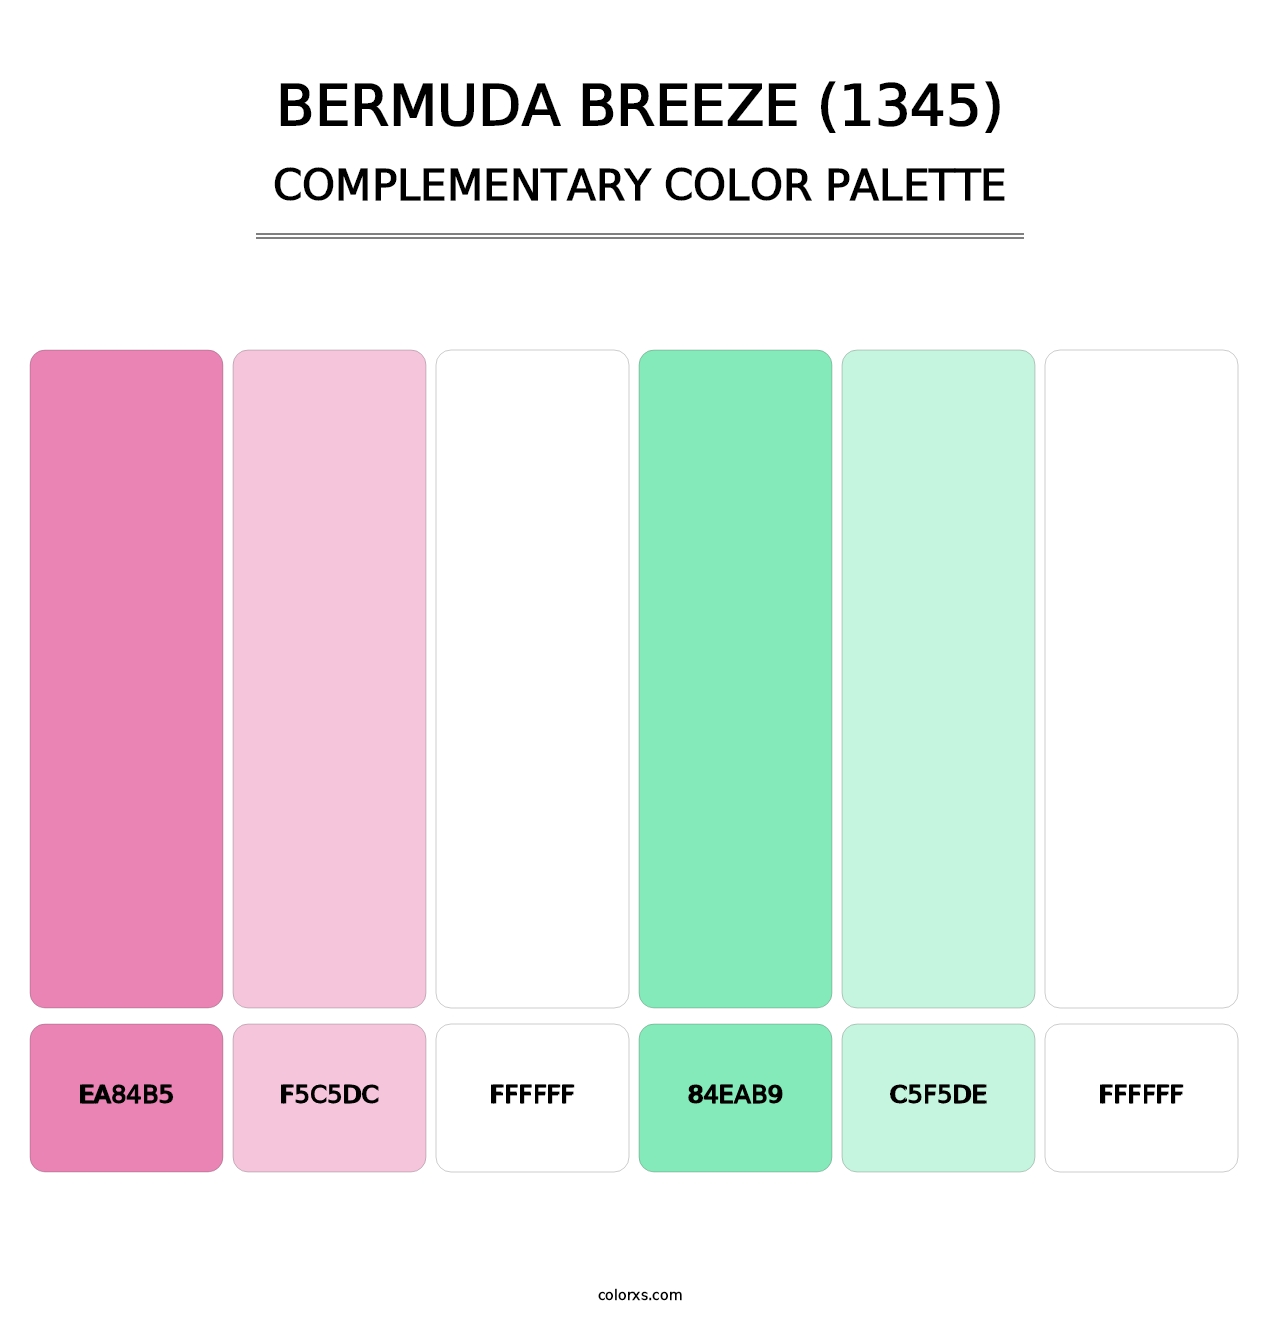 Bermuda Breeze (1345) - Complementary Color Palette